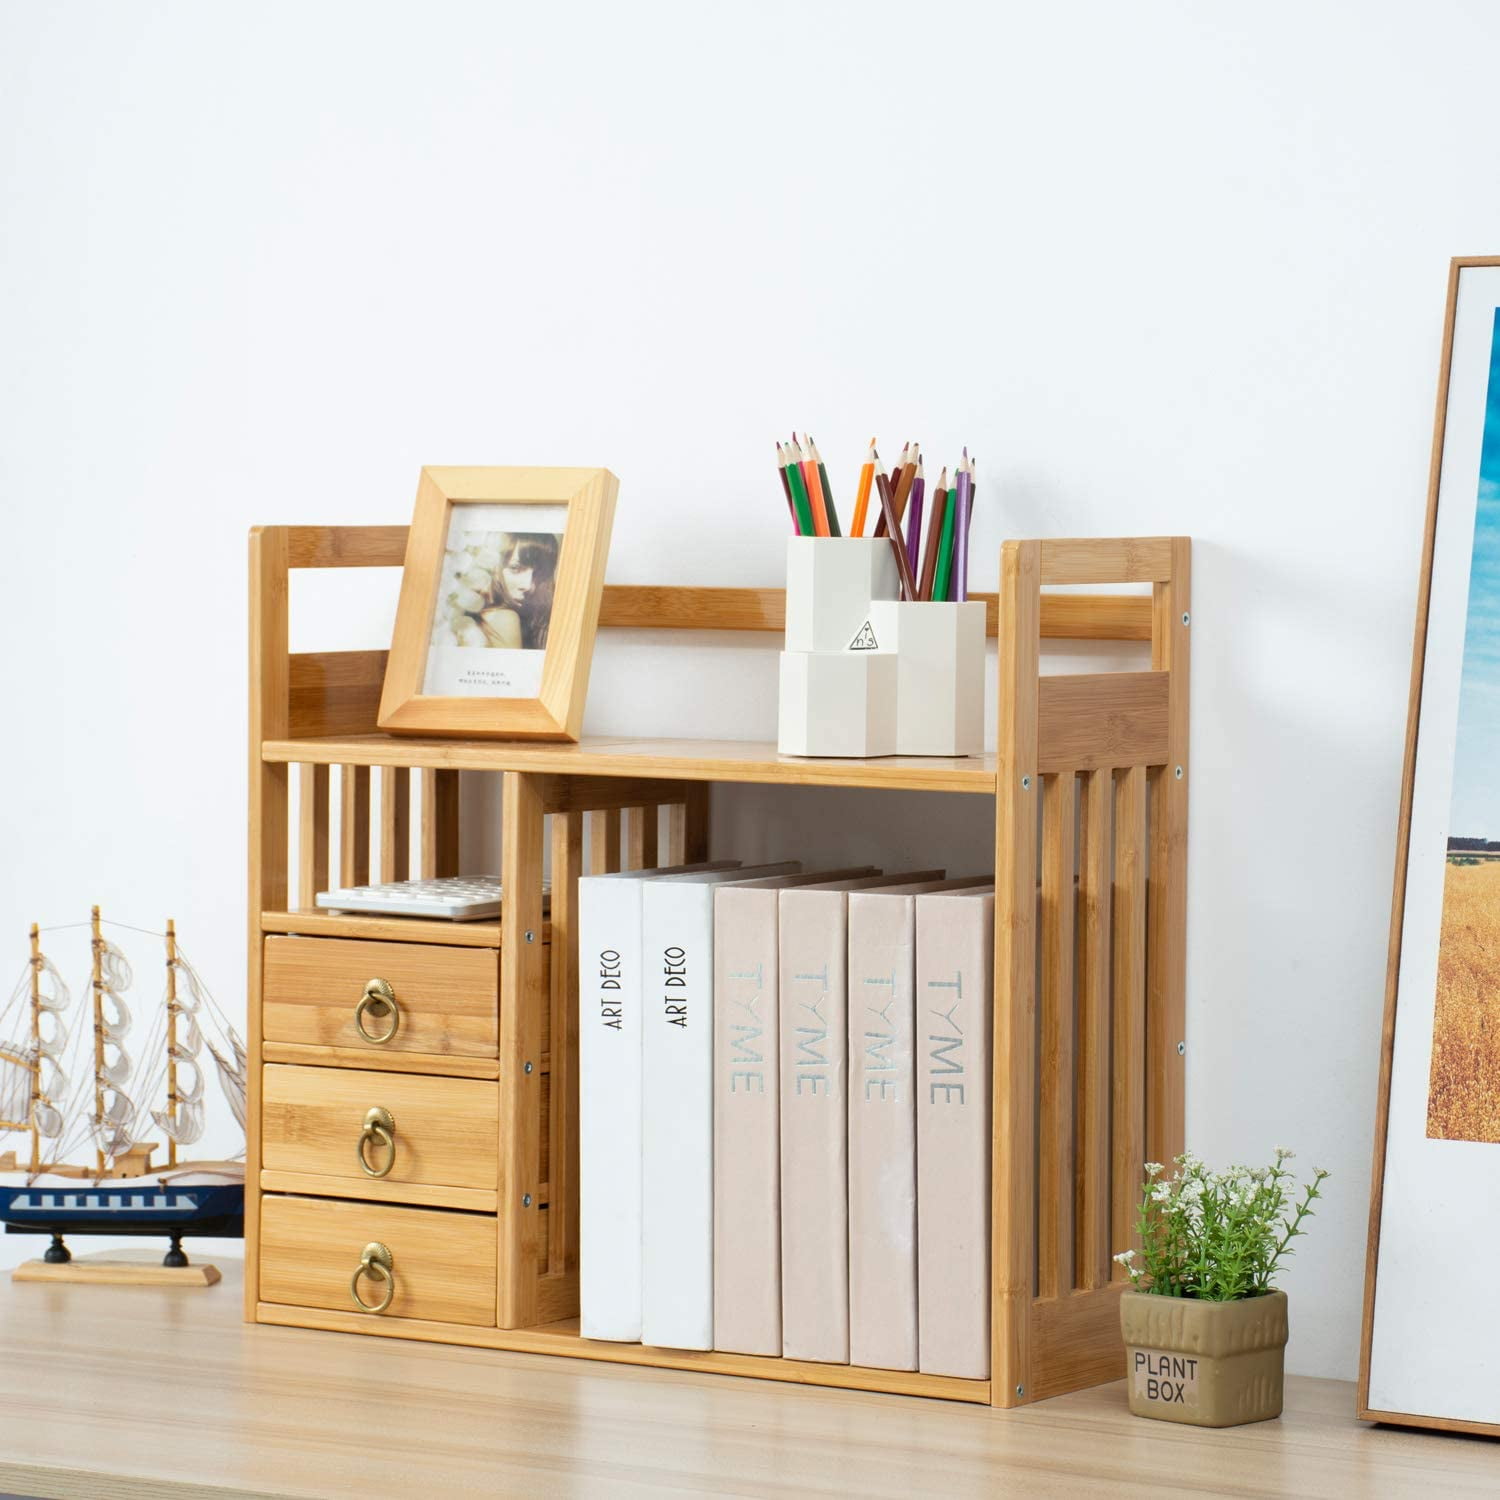 Freestanding Style for Bedroom Tabletop Dorm Desk. Bamboo Desktop Bookshelf，Suwoic 2-Tier Bookcase File Storage Organizer with Drawer 